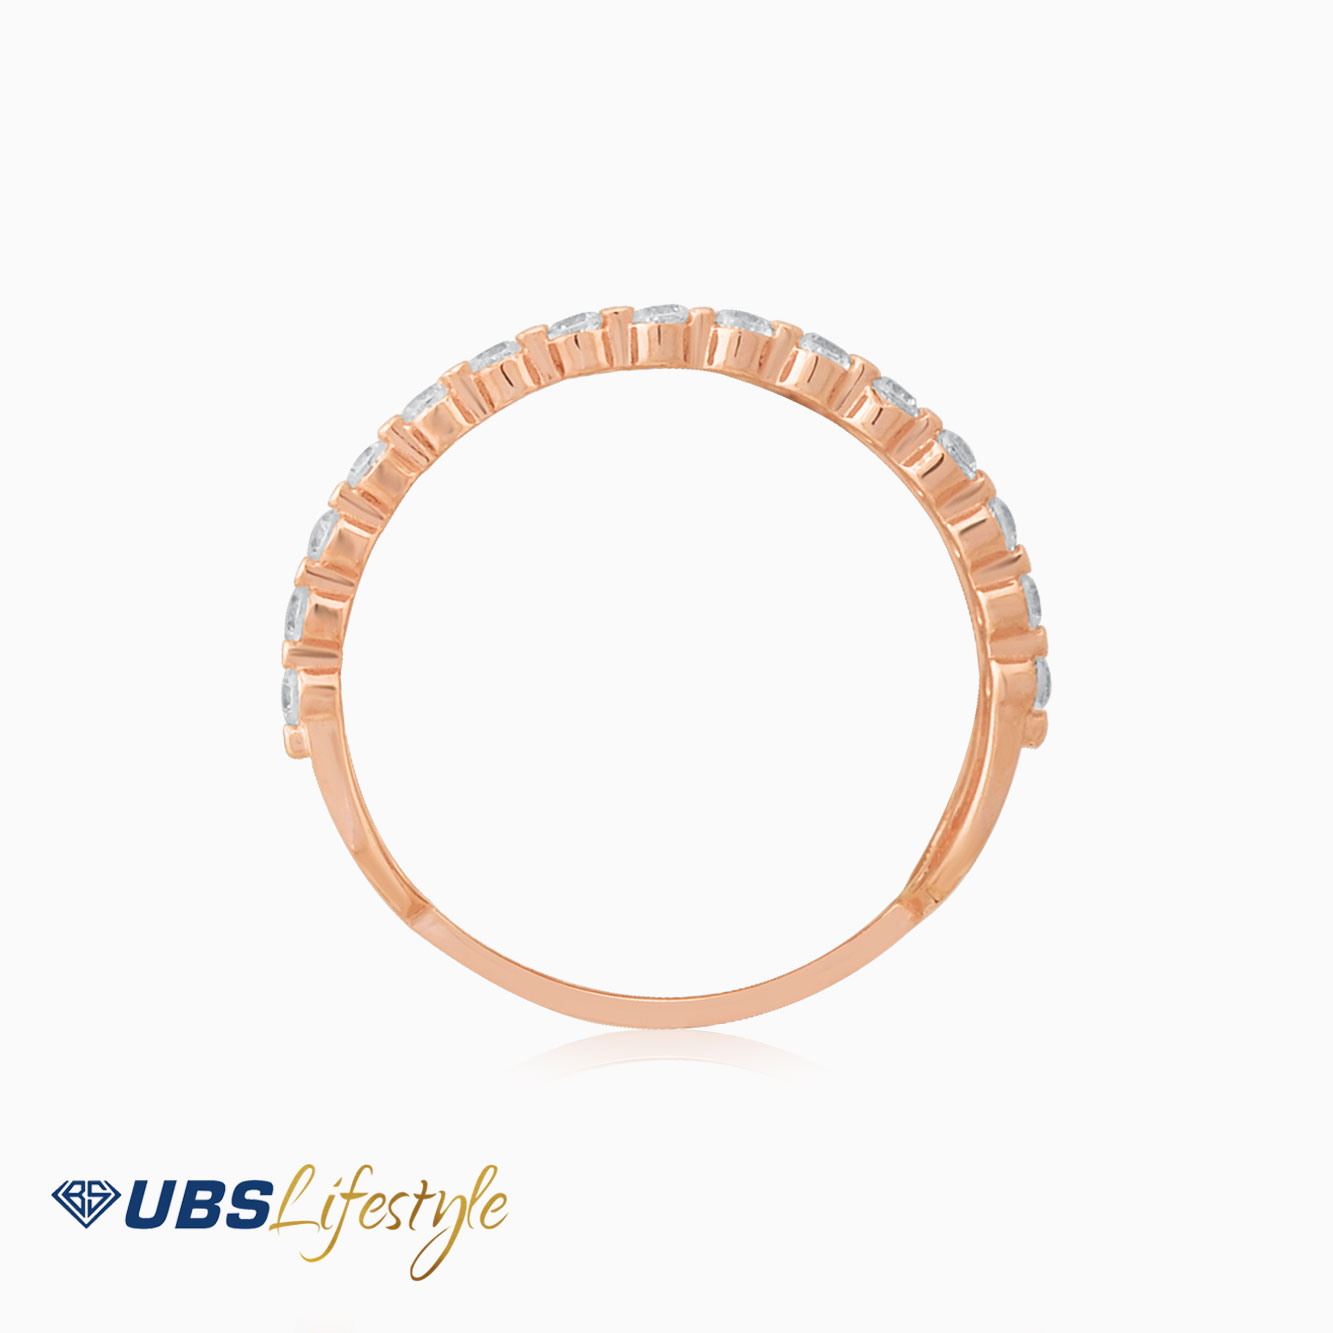 UBS Cincin Emas - Cc15604 - 17K